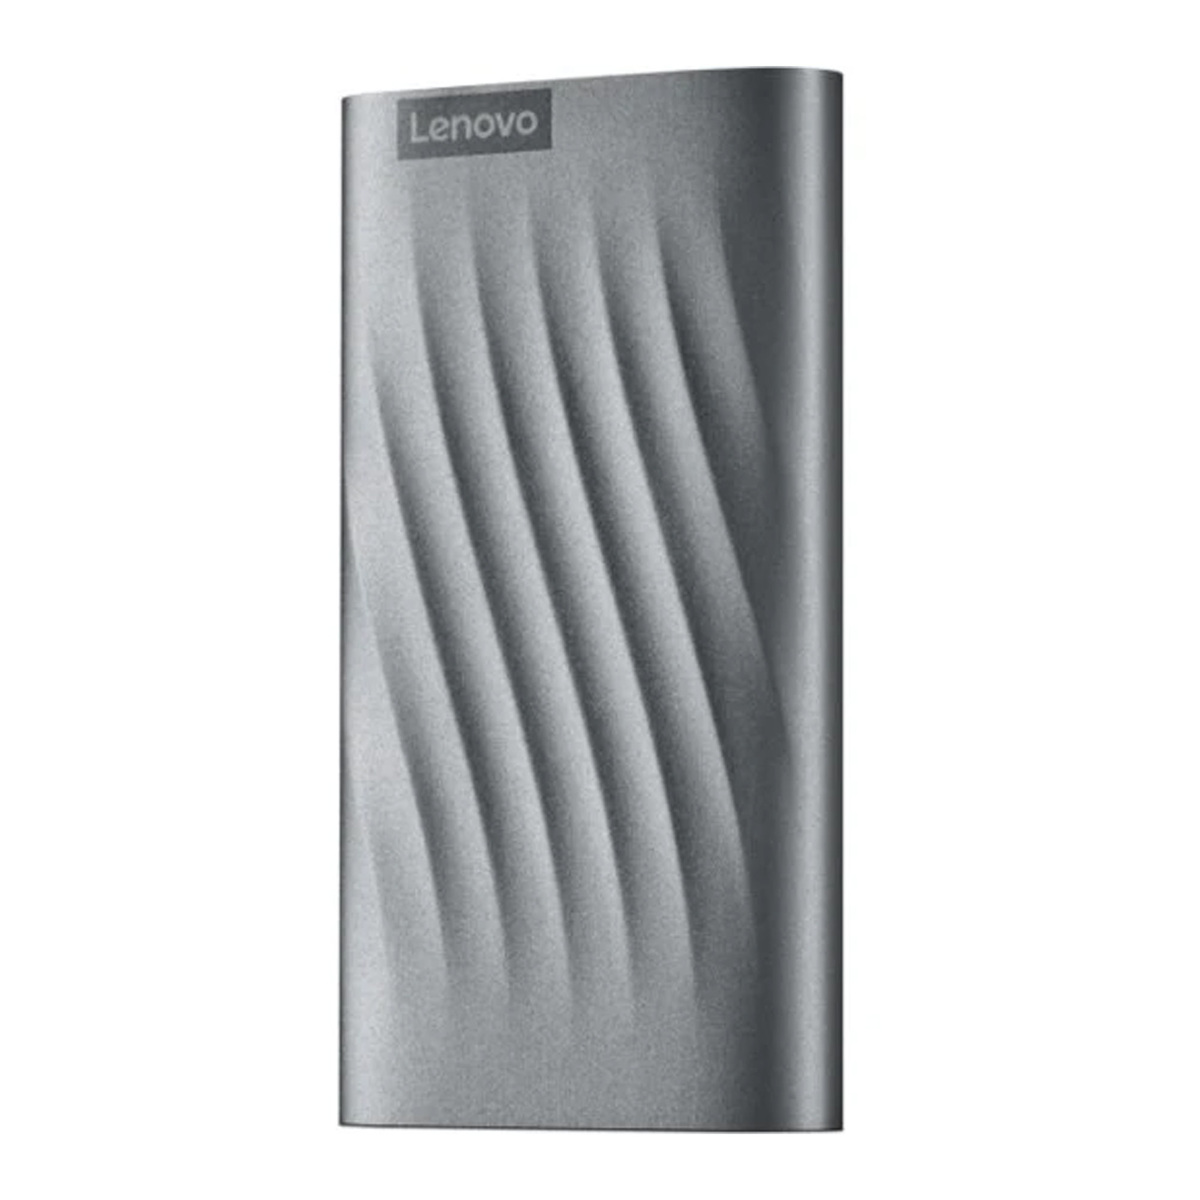 Lenovo PS6 Portable SSD, 512 GB Storage, GXB1M24163